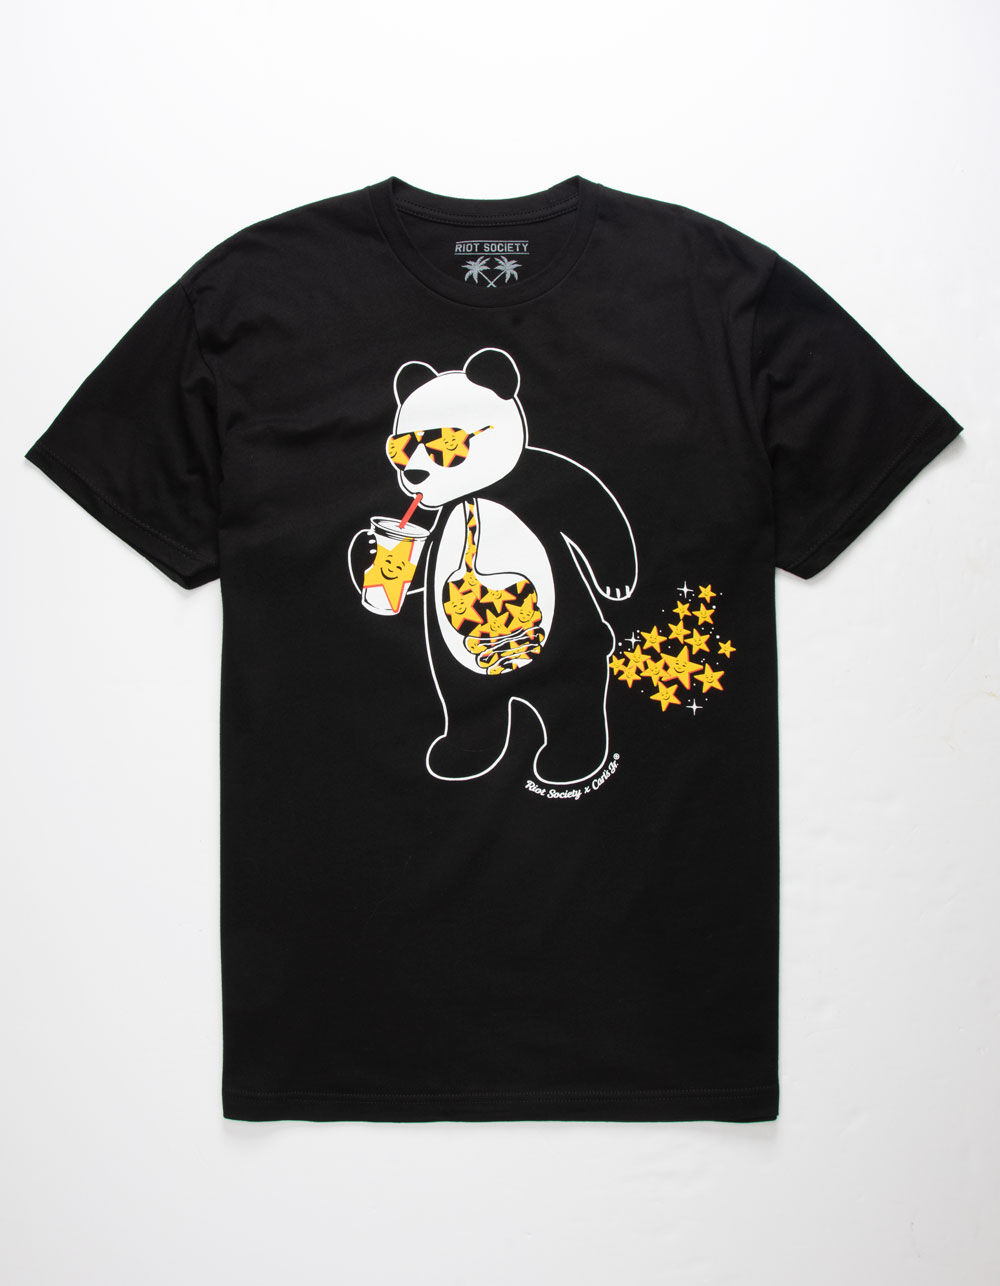 RIOT SOCIETY x Carl's Jr. Panda Star Mens T-Shirt - BLACK | Tillys